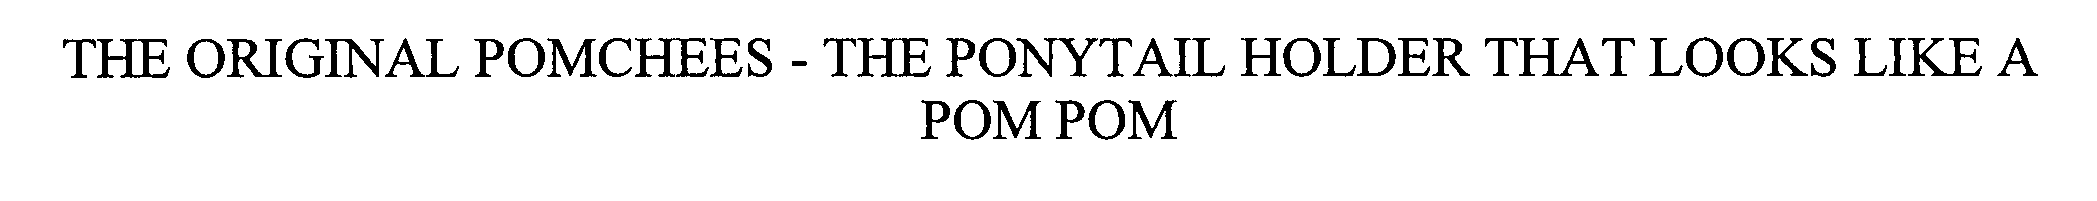  THE ORIGINAL POMCHEES - THE PONYTAIL HOLDER THAT LOOKS LIKE A POM POM